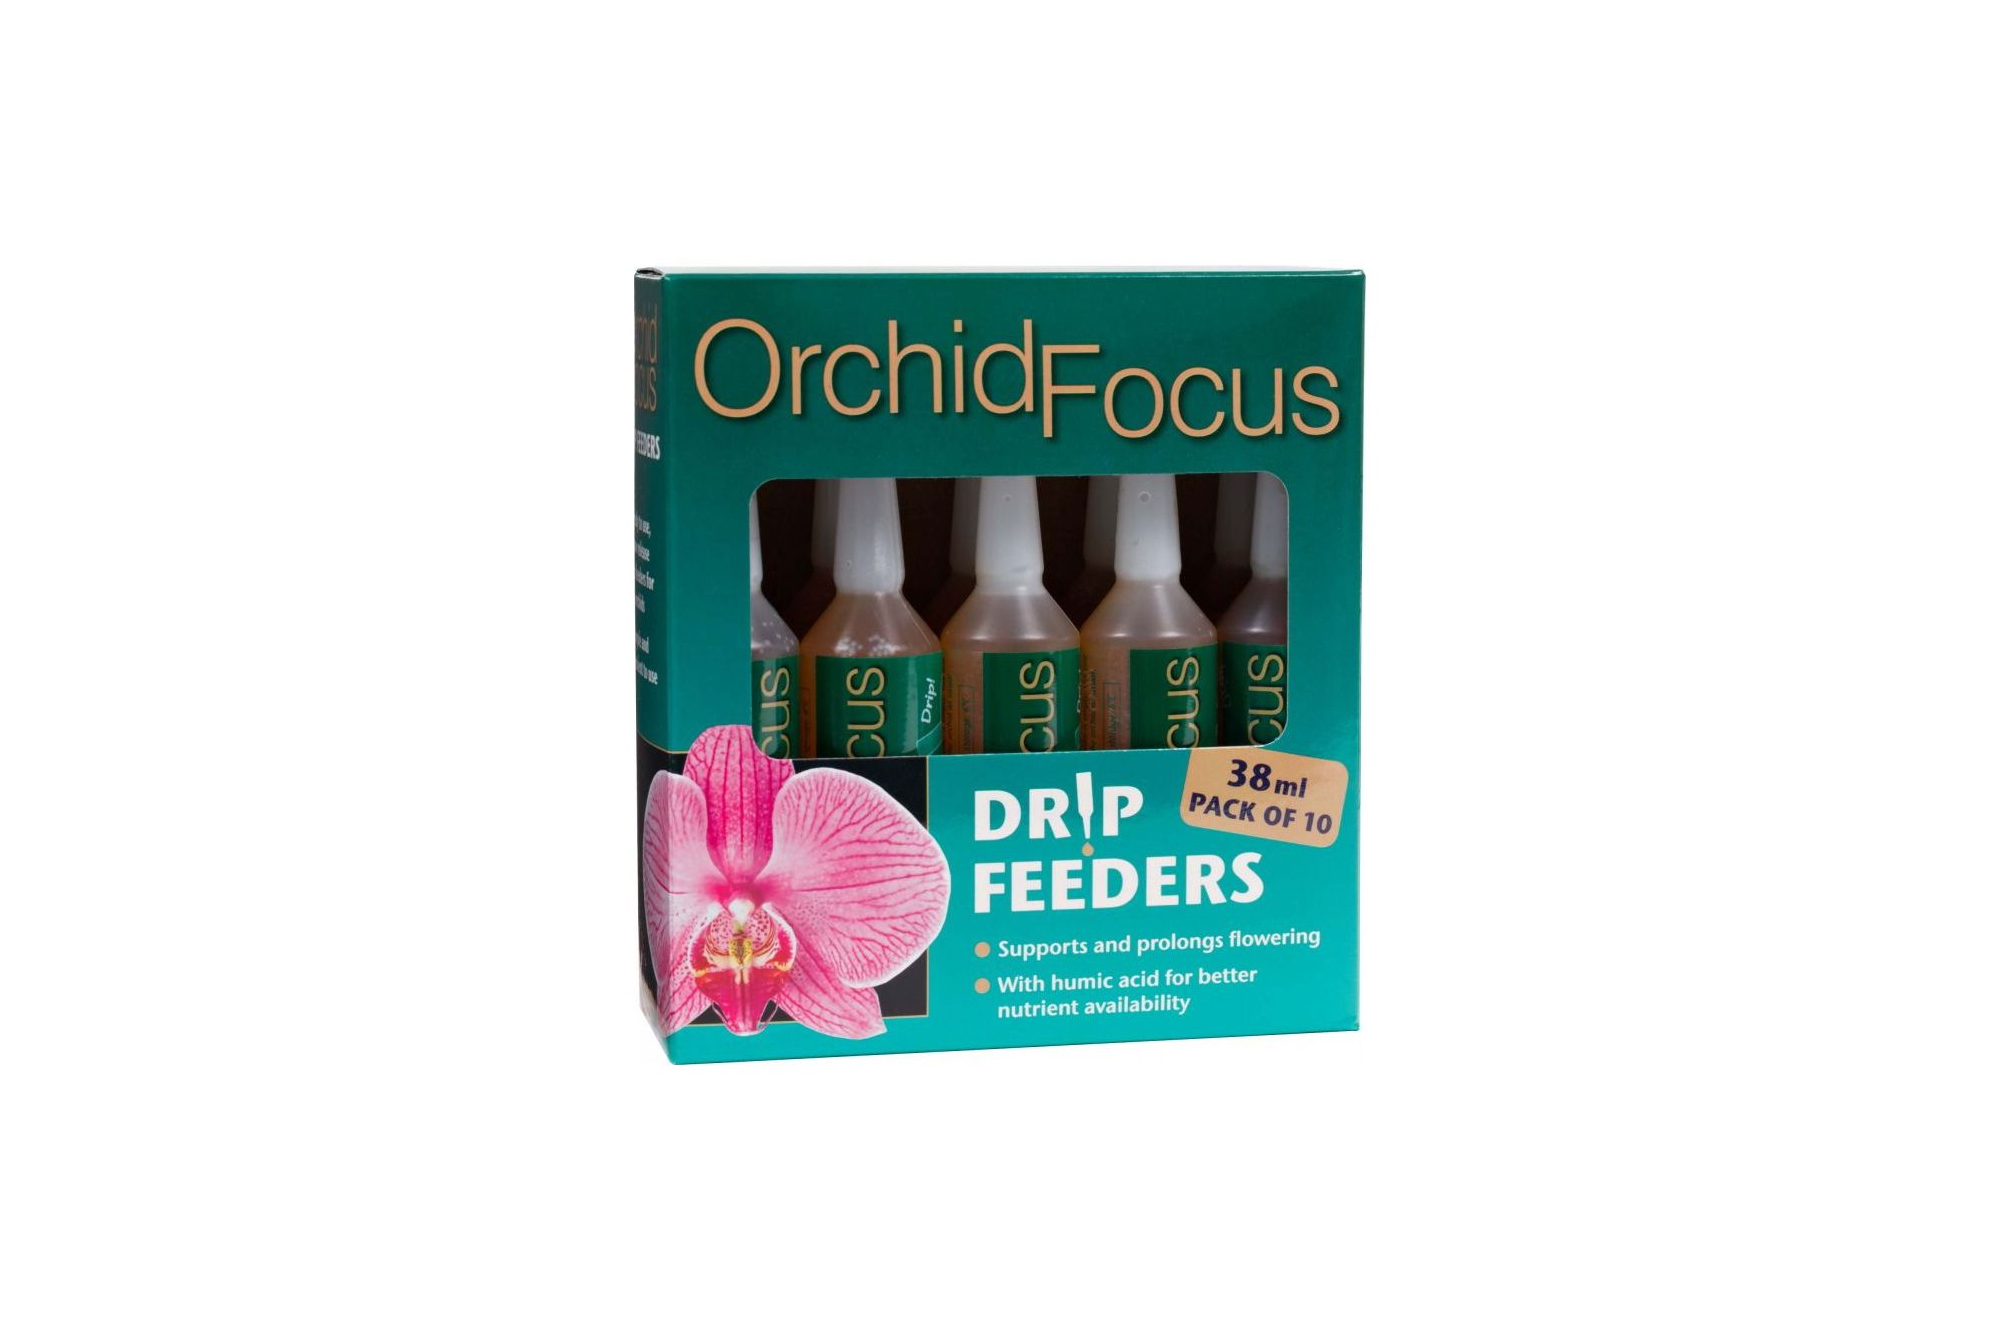 Изображение товара Growth Technology Orchid Focus Drip Feeders 10 по 38 мл